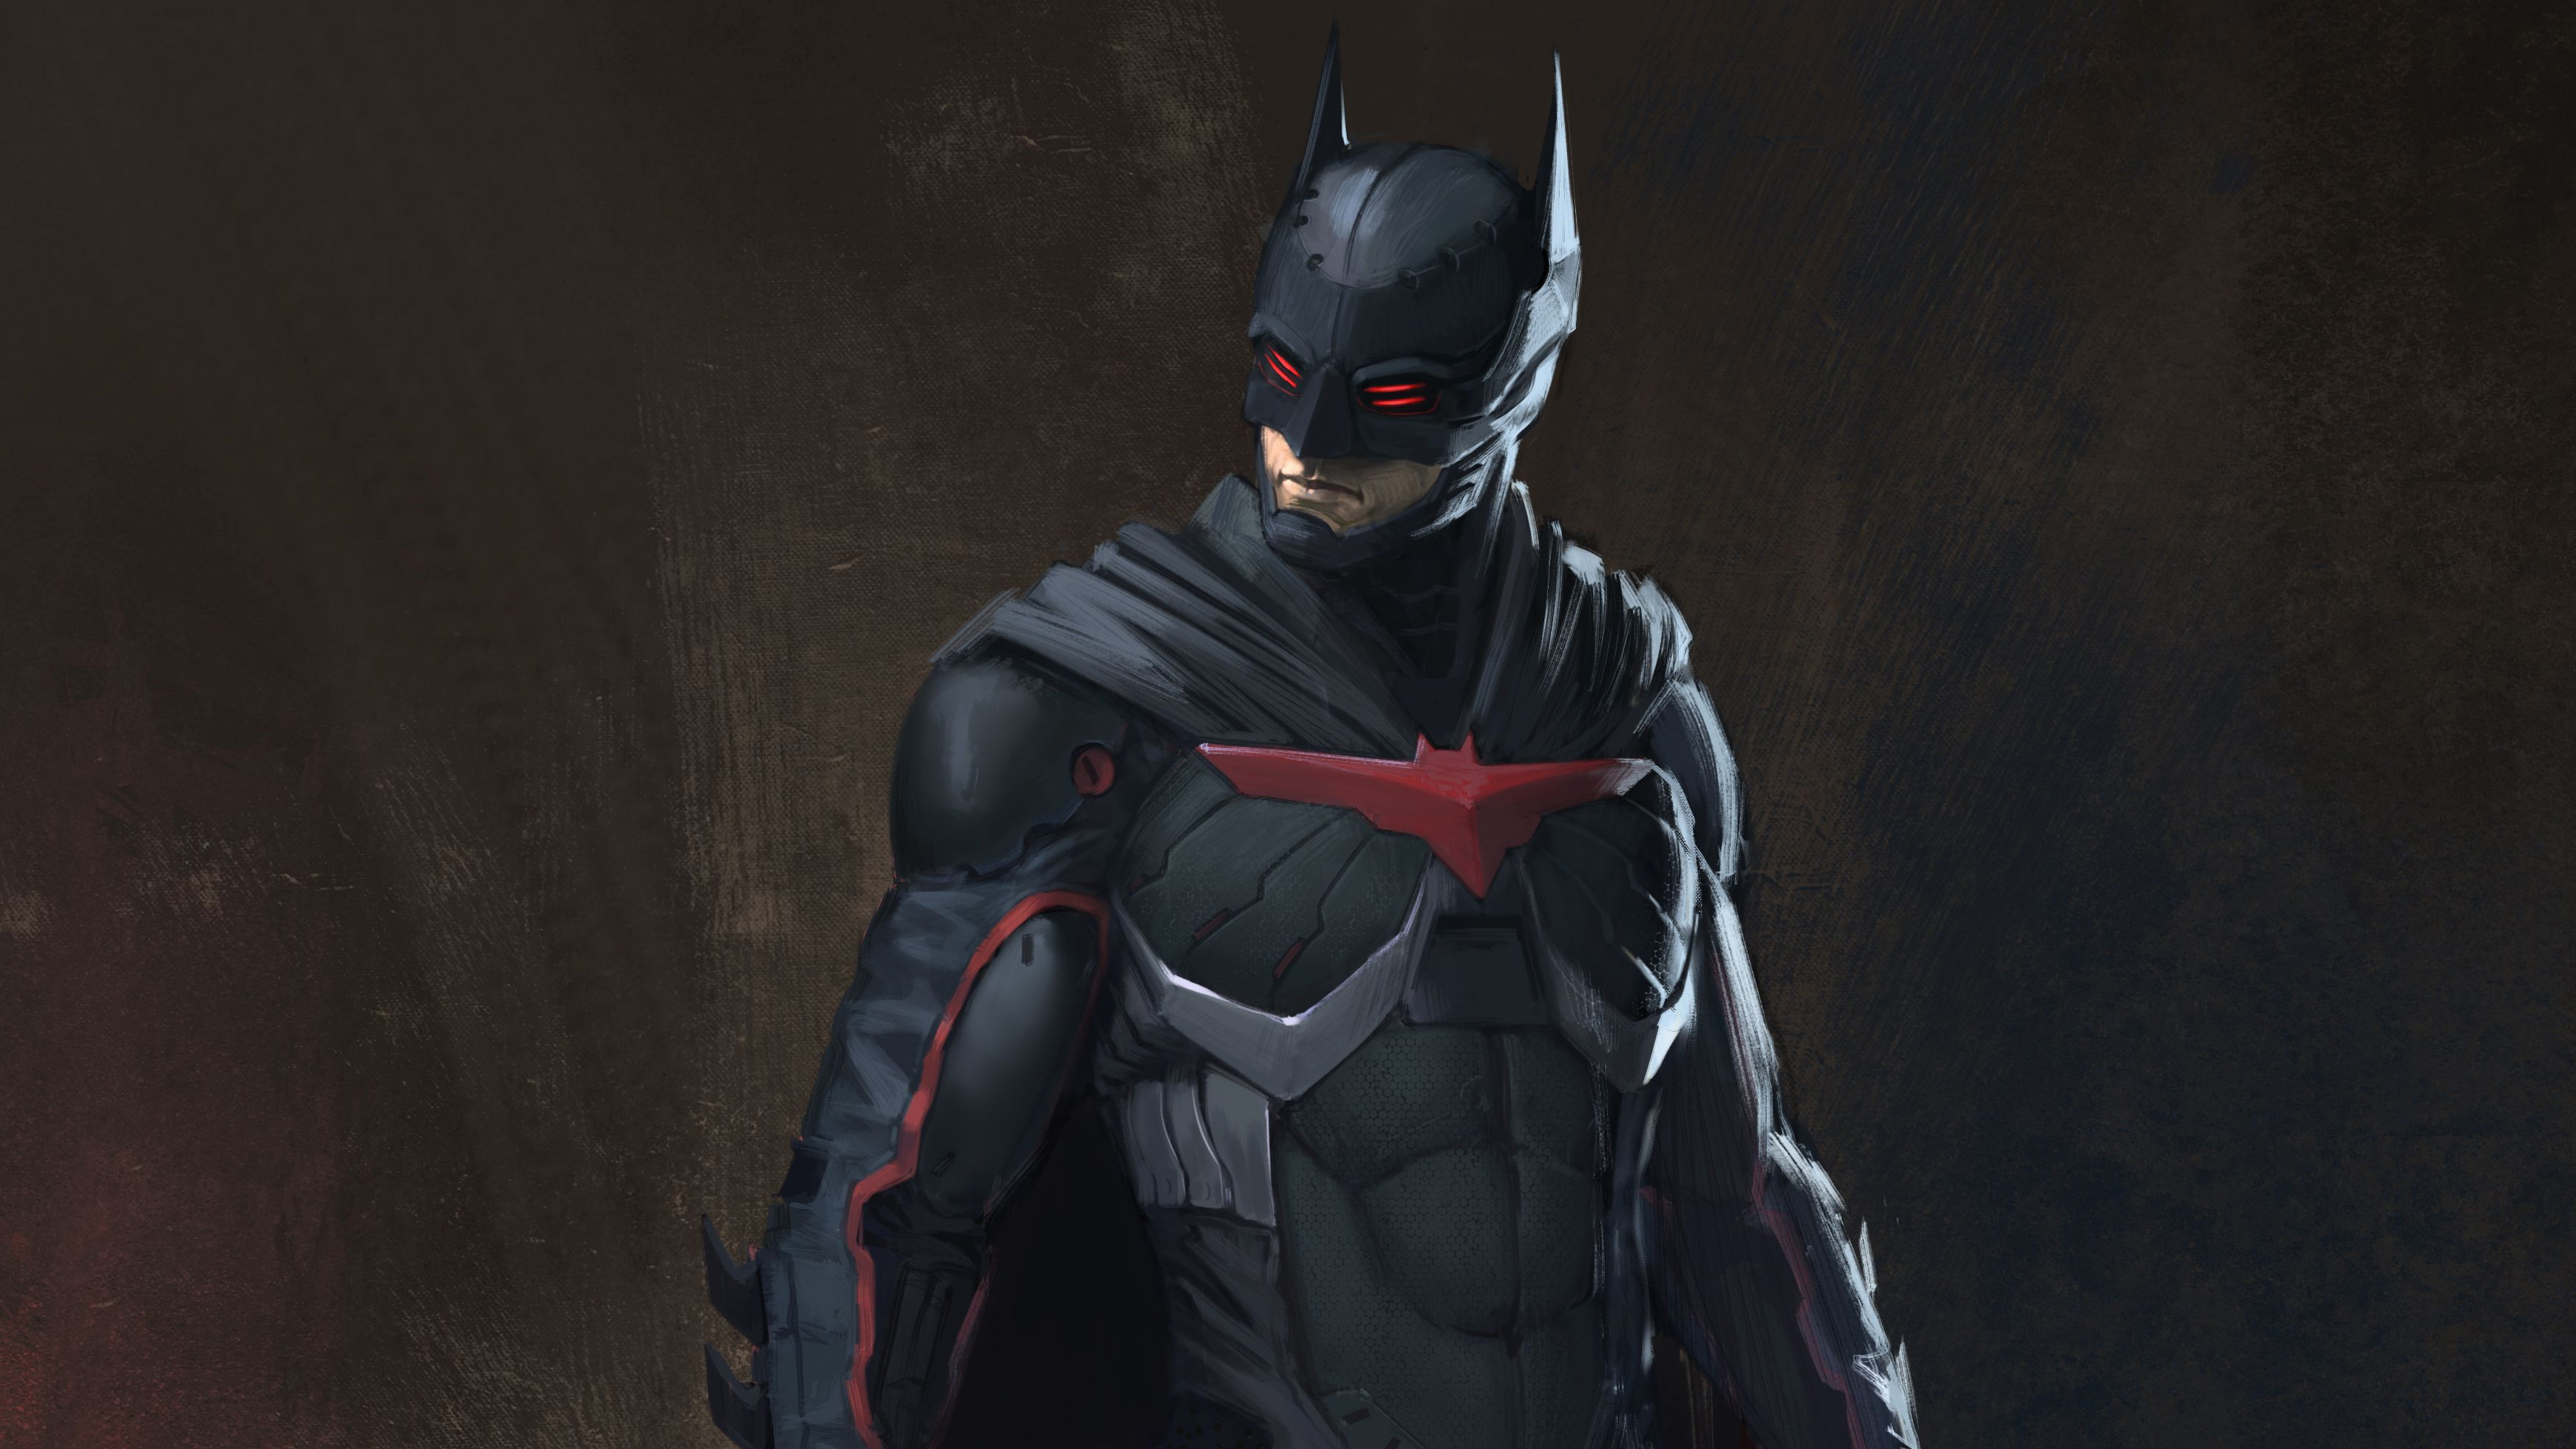  Batman  Injustice Artwork 4k  HD Superheroes 4k  Wallpapers  